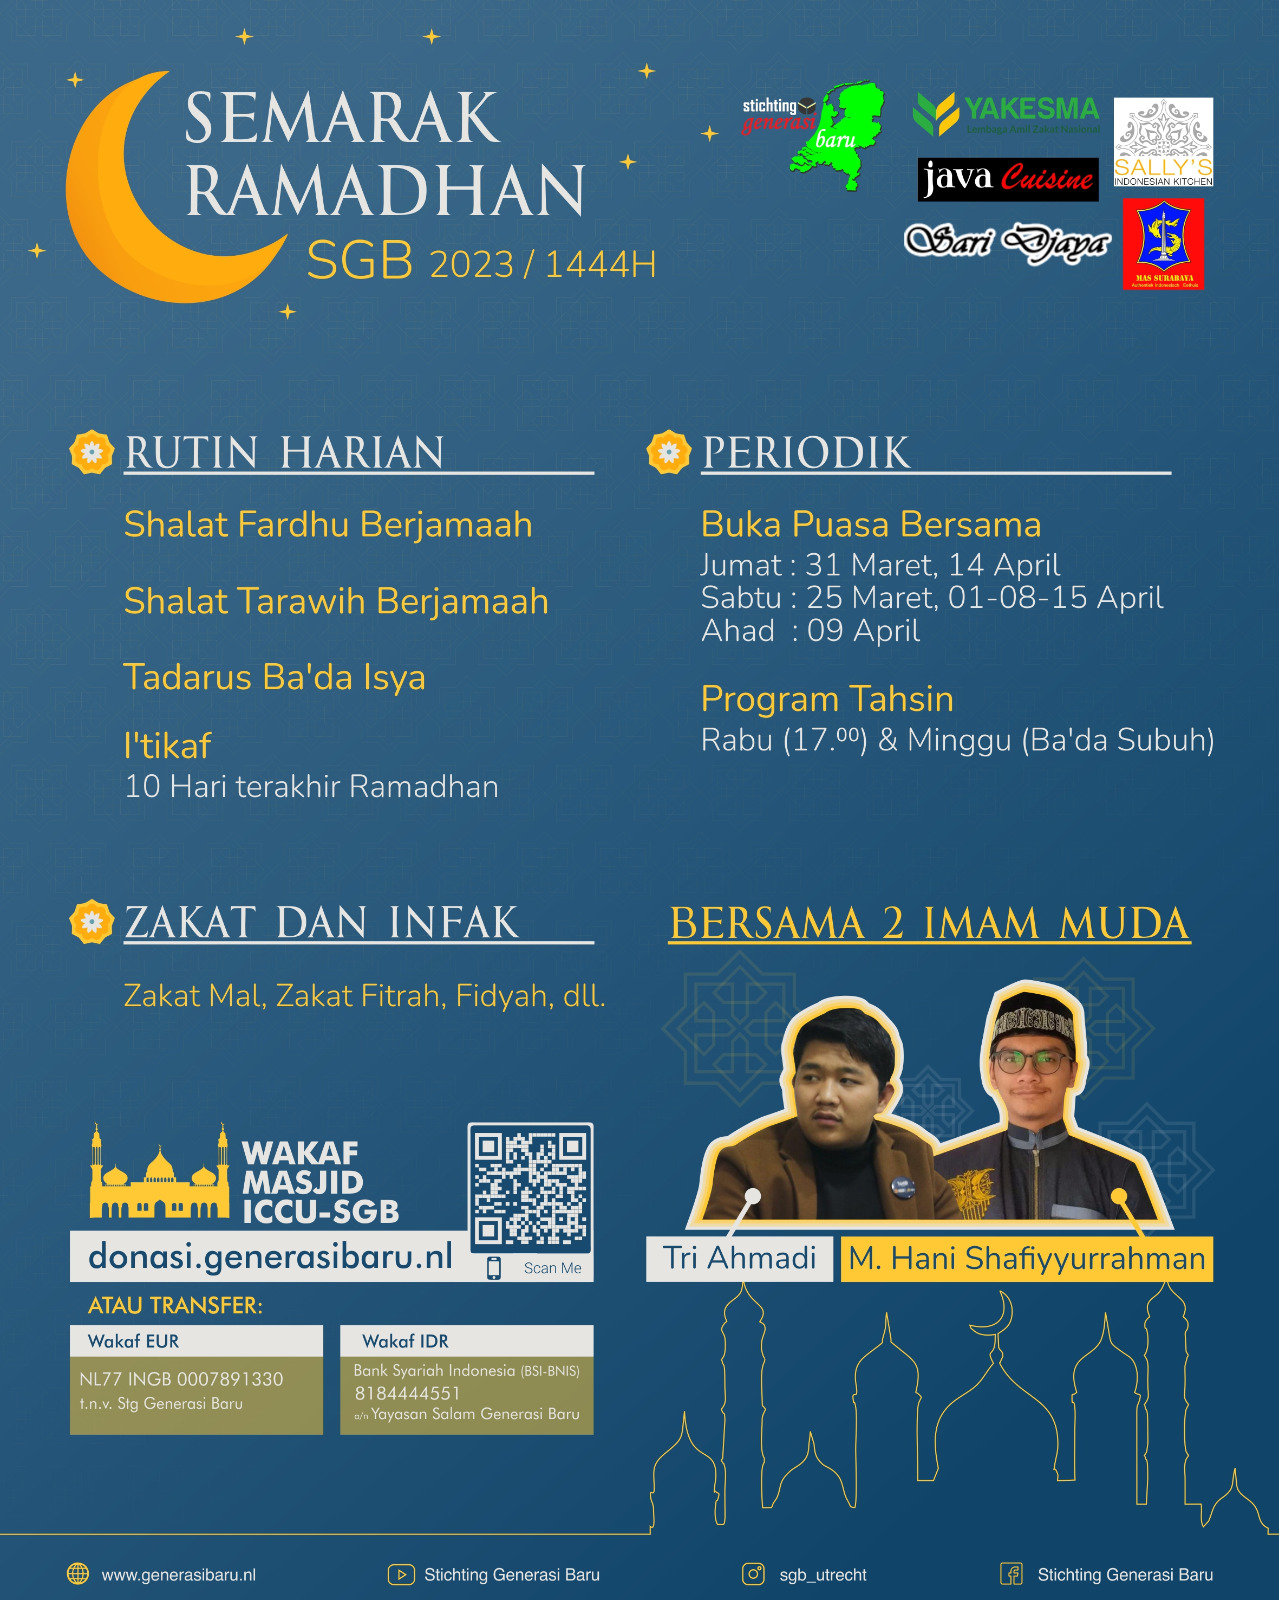 Semarak Ramadhan 2023 / 1444H